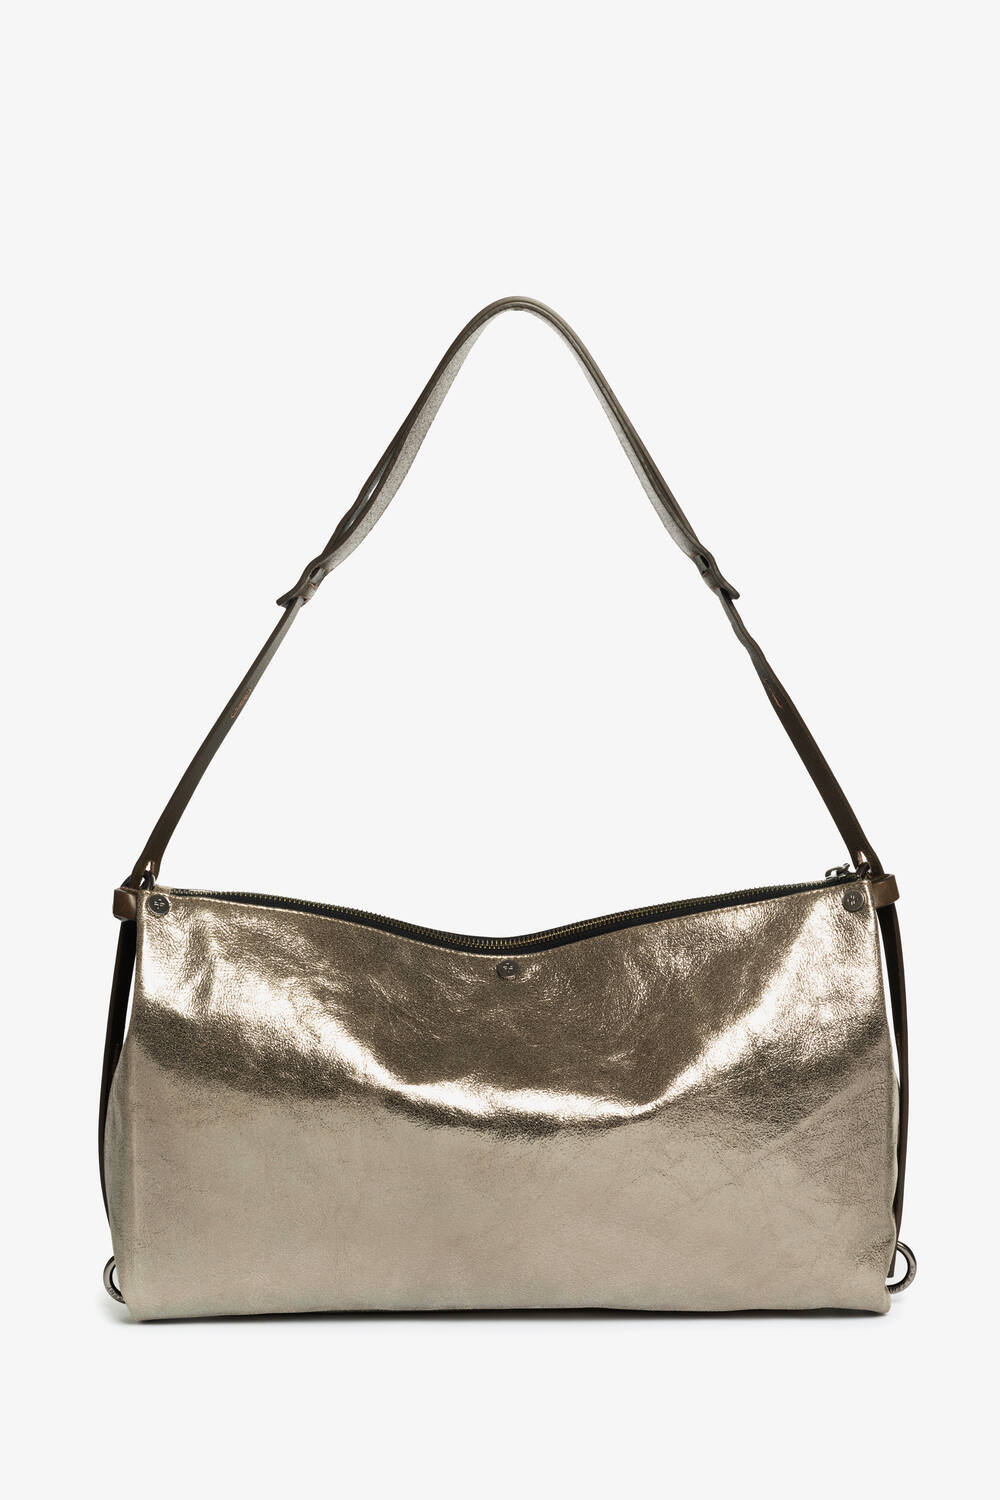 INA KENT vielseitige Handtasche aus schimmerndem metallic Leder DINKUM ed.2 crackled anthra